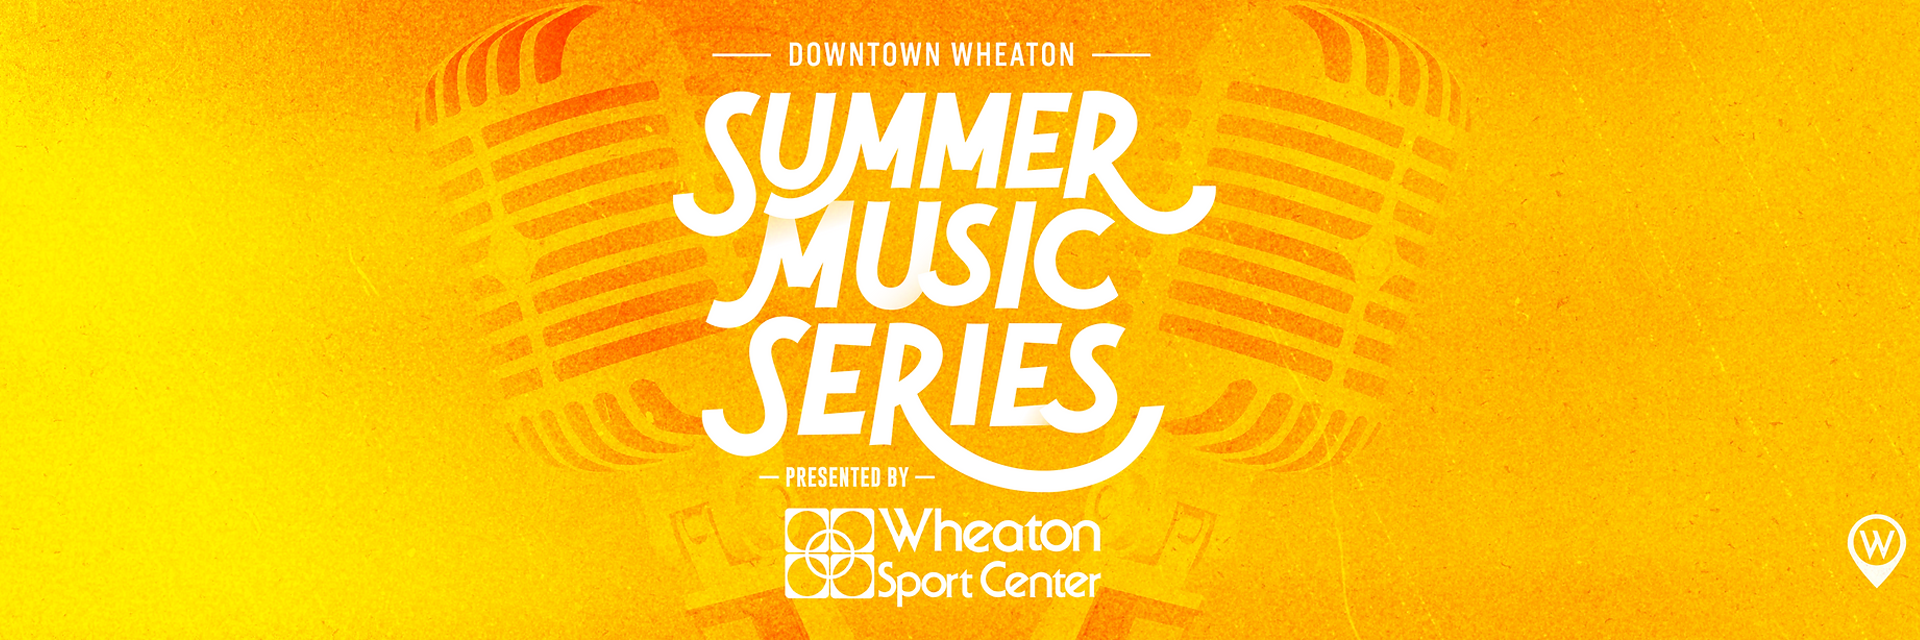 Downtown Wheaton Summer Live Music Series